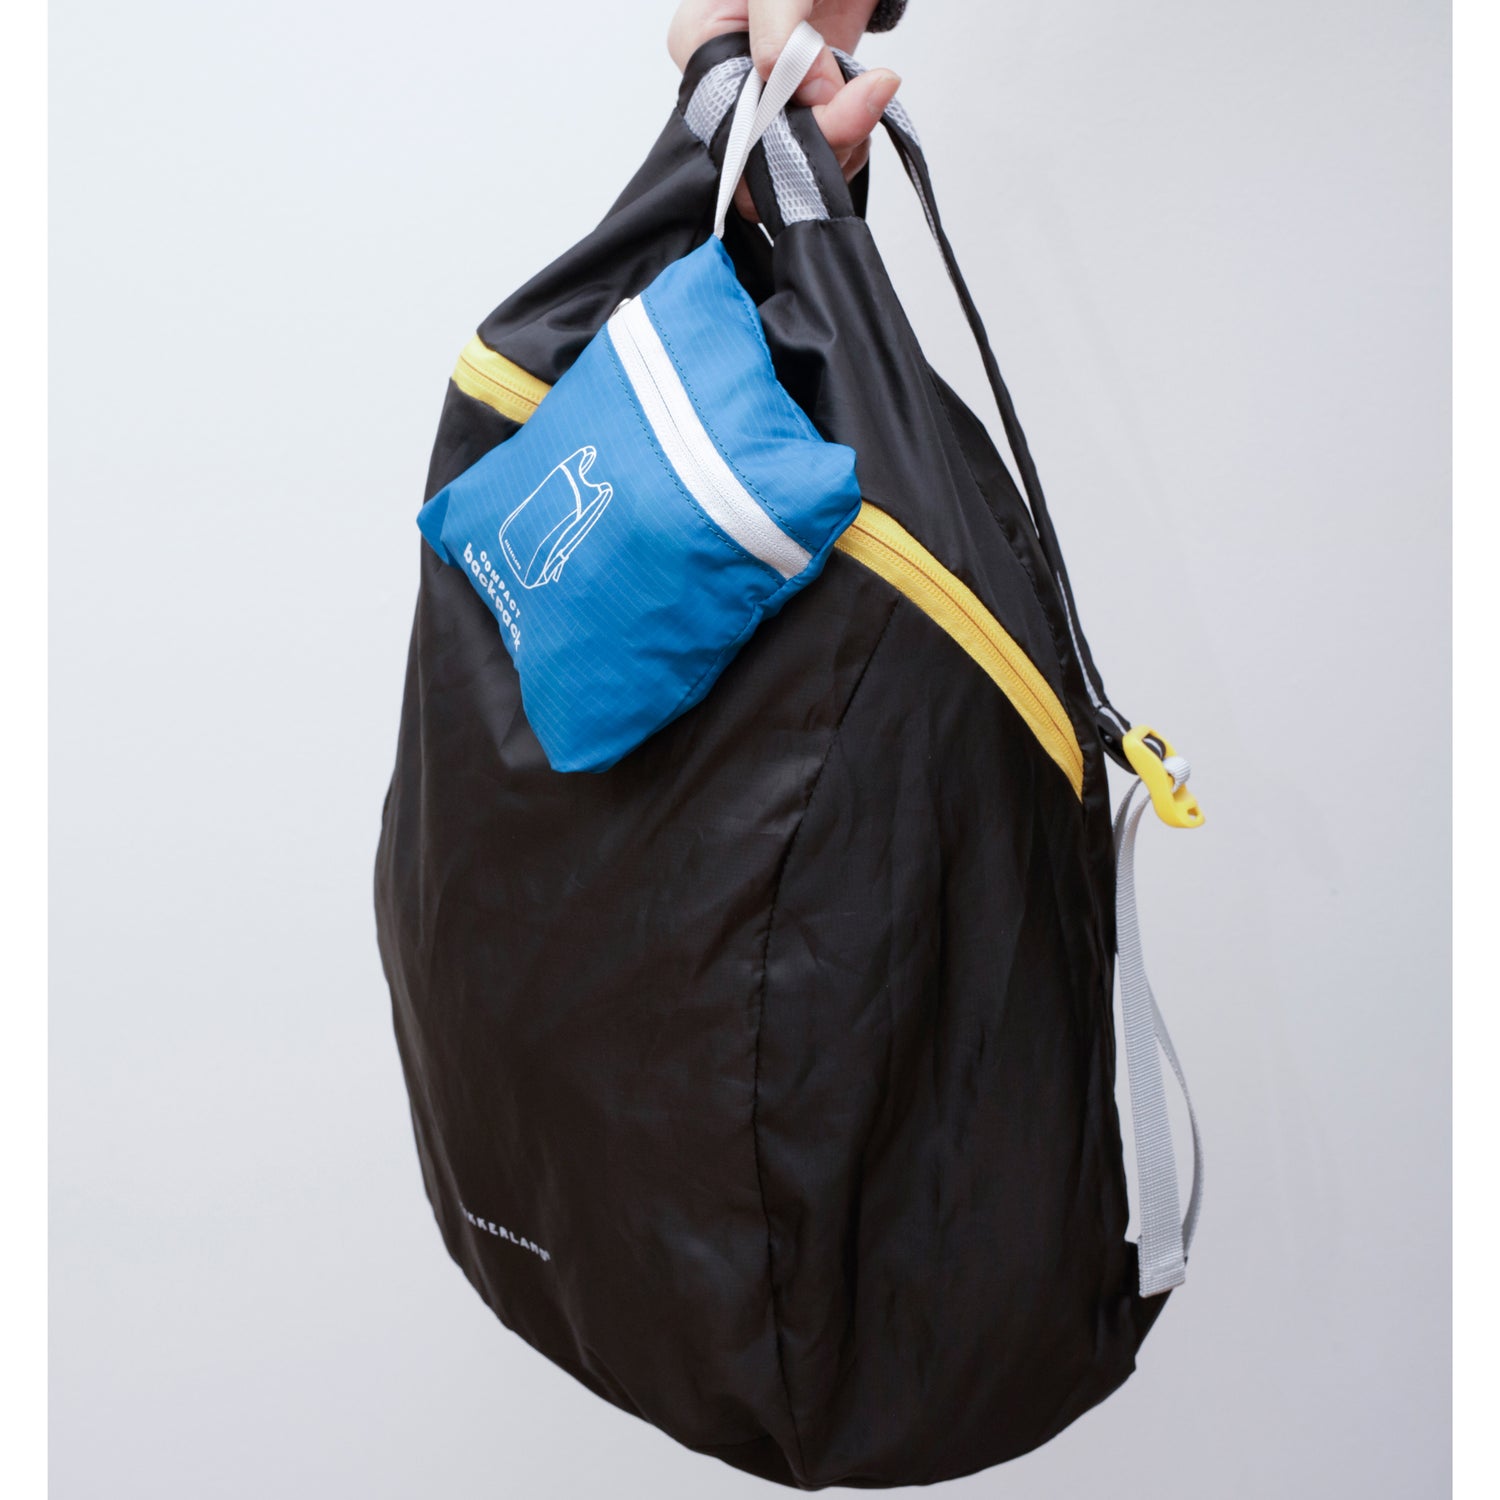 Black Compact Backpack